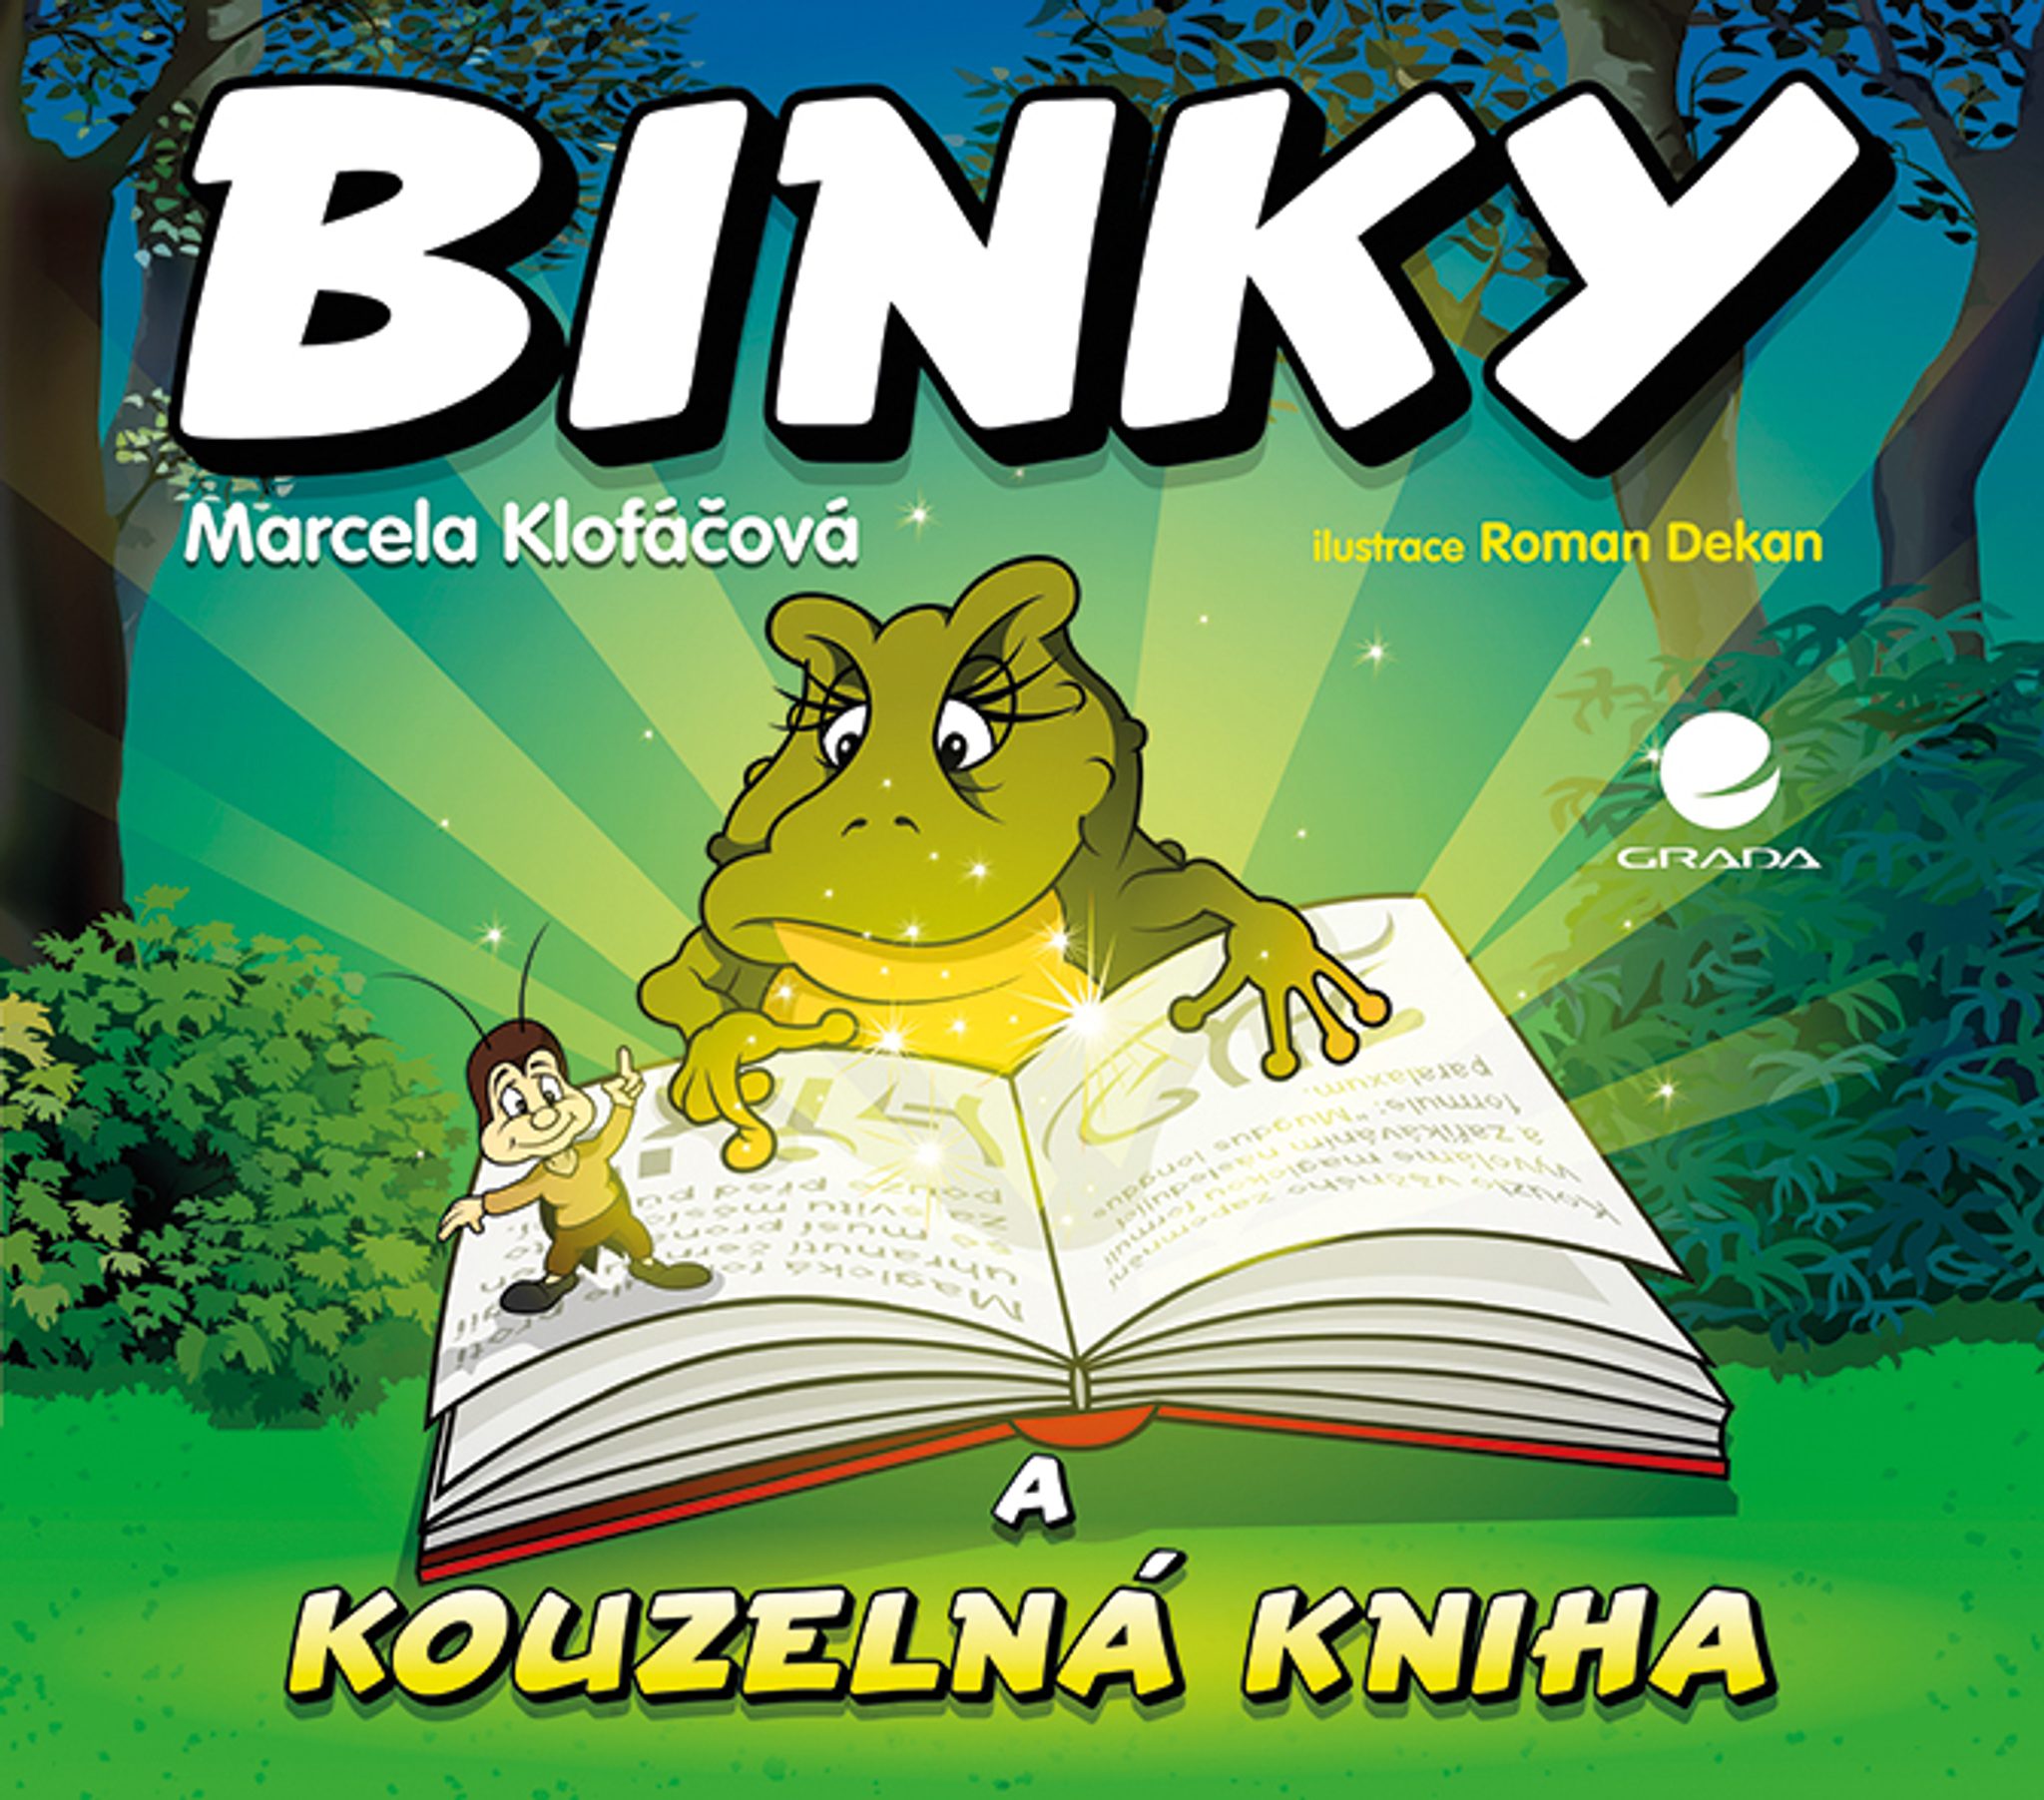 Binky a kouzeln kniha / Binky and the Book of Spells - Dvojjazyn pohdka (J, AJ)